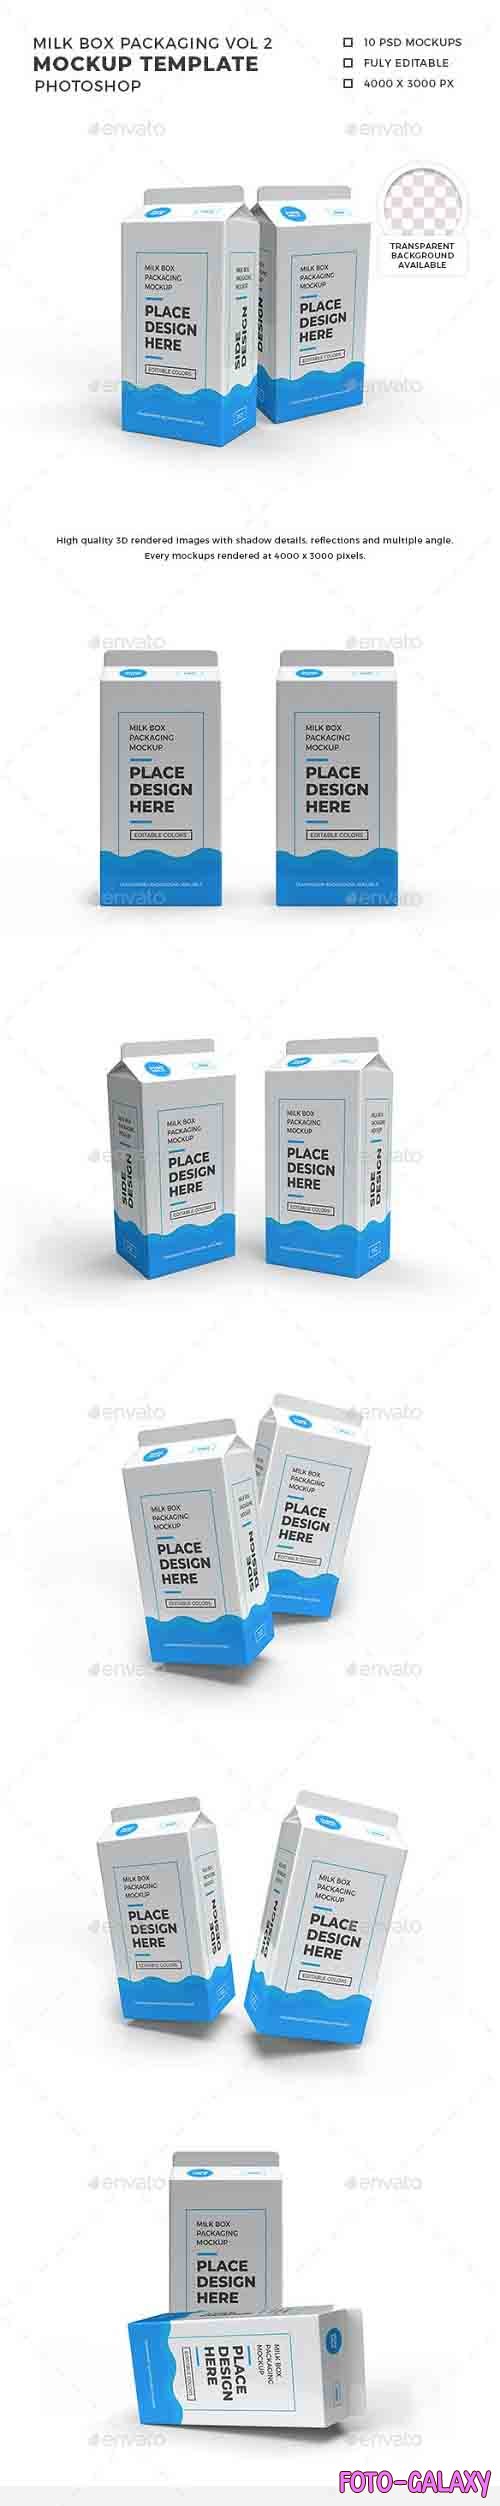 Milk Box Packaging Mockup Template Vol 2 - 32535869